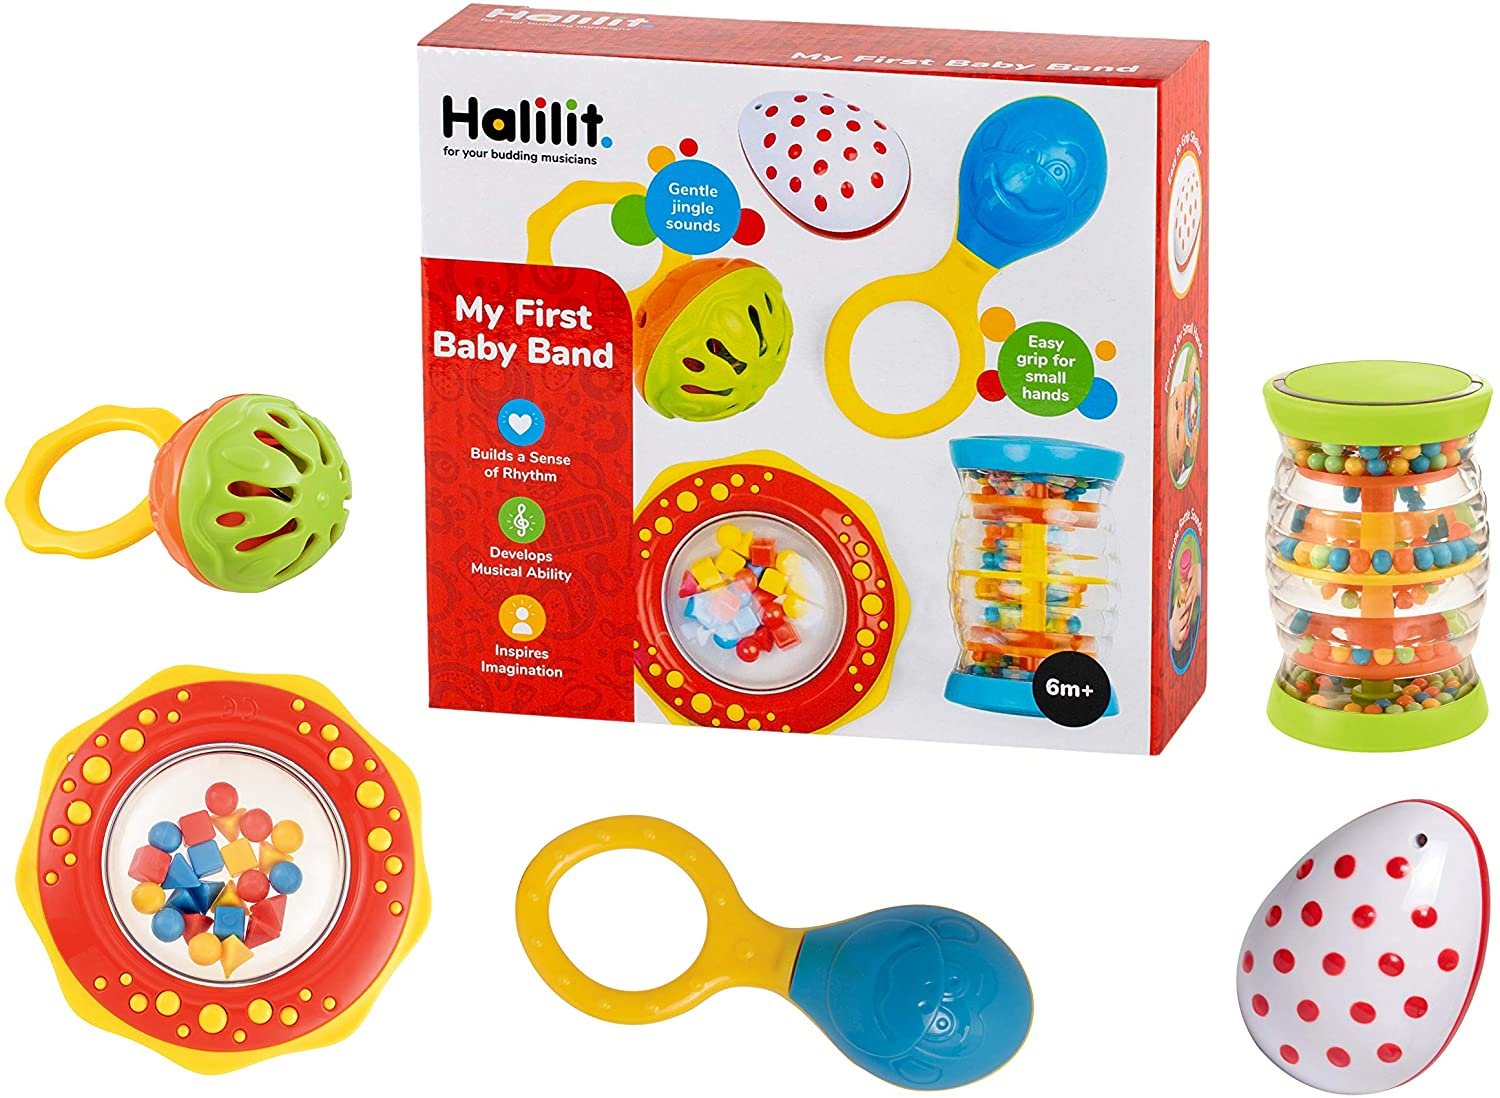 Juegos y juguetes para bebés de 6 a 9 meses